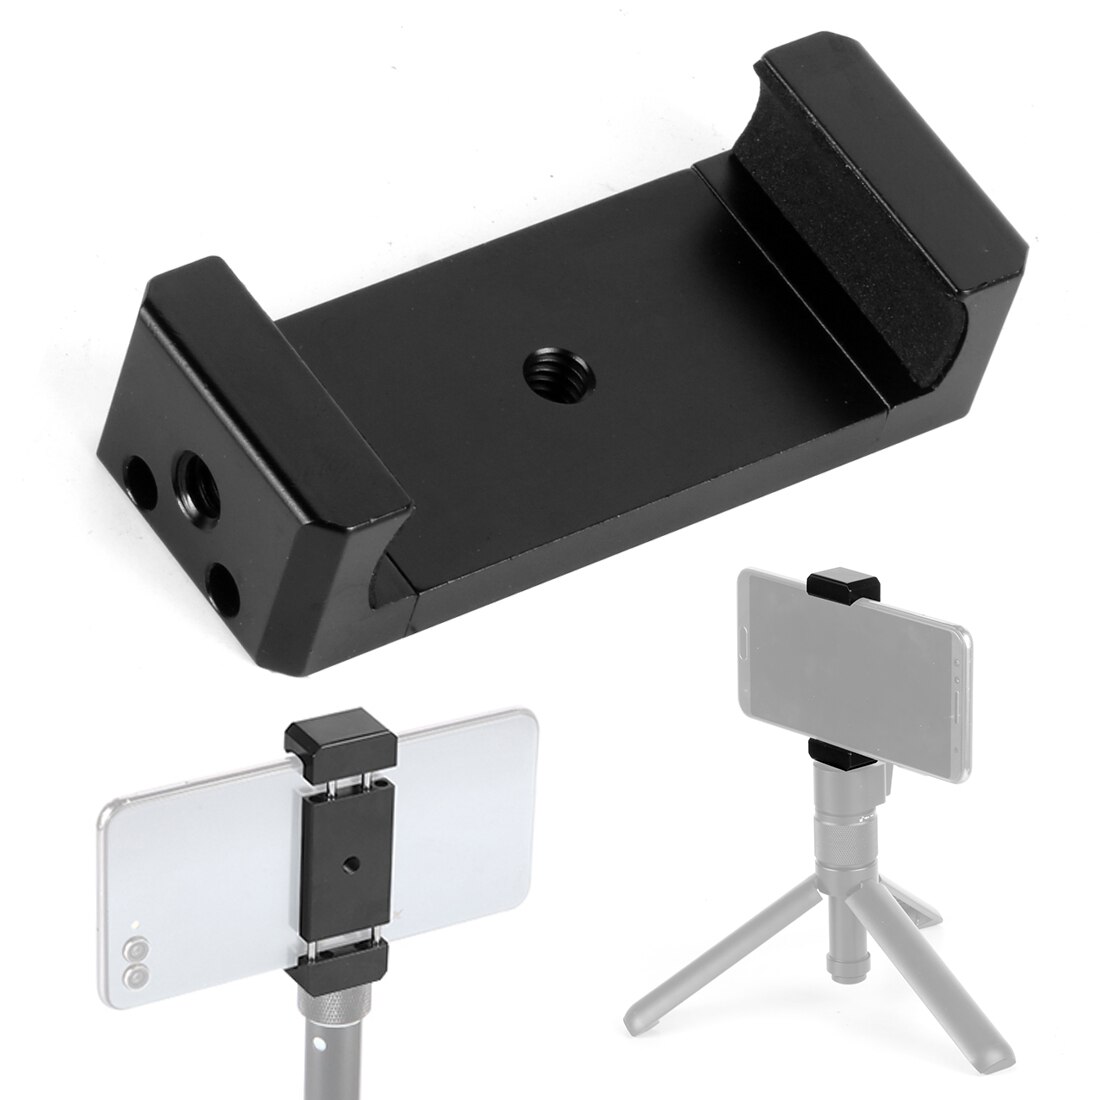 Selfie Stick Tripod phone tripod mount Head Bracket Mobile Phone Holder Clip For Phone Flashlight Microphone With Spirit level: 2x Screw Holes